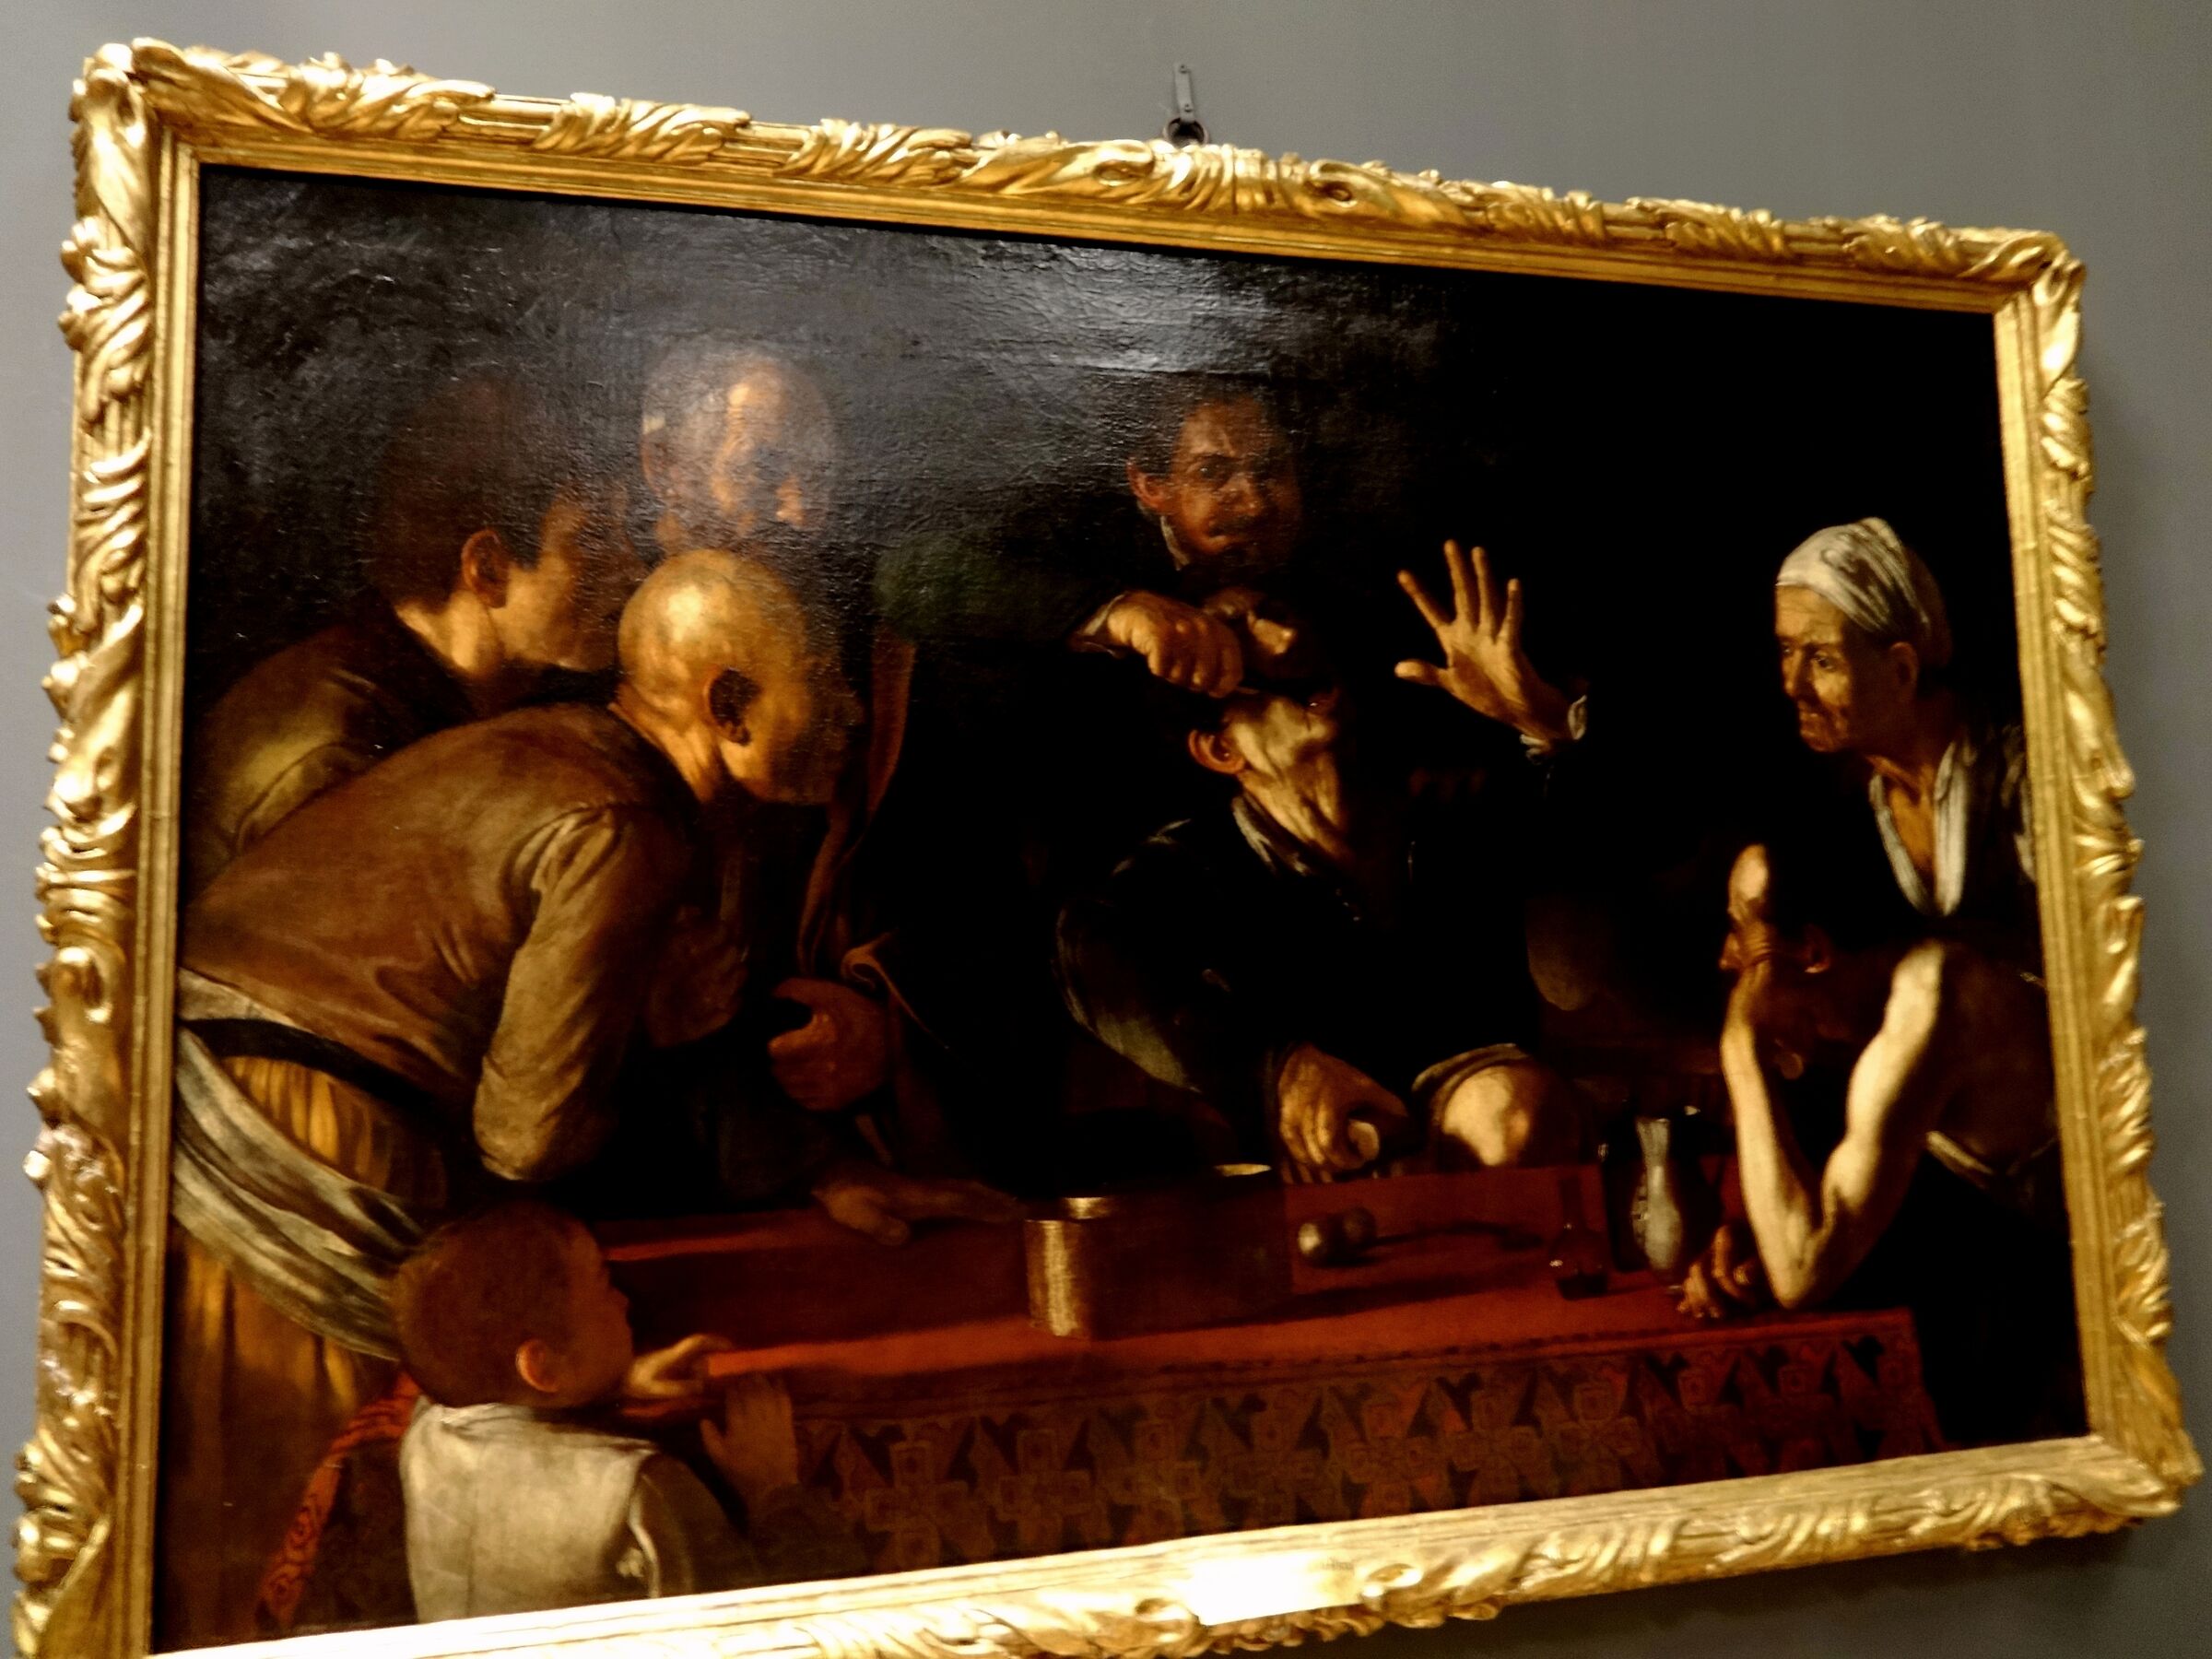 Palatine Gallery - Caravaggio "The Cavadenti"...